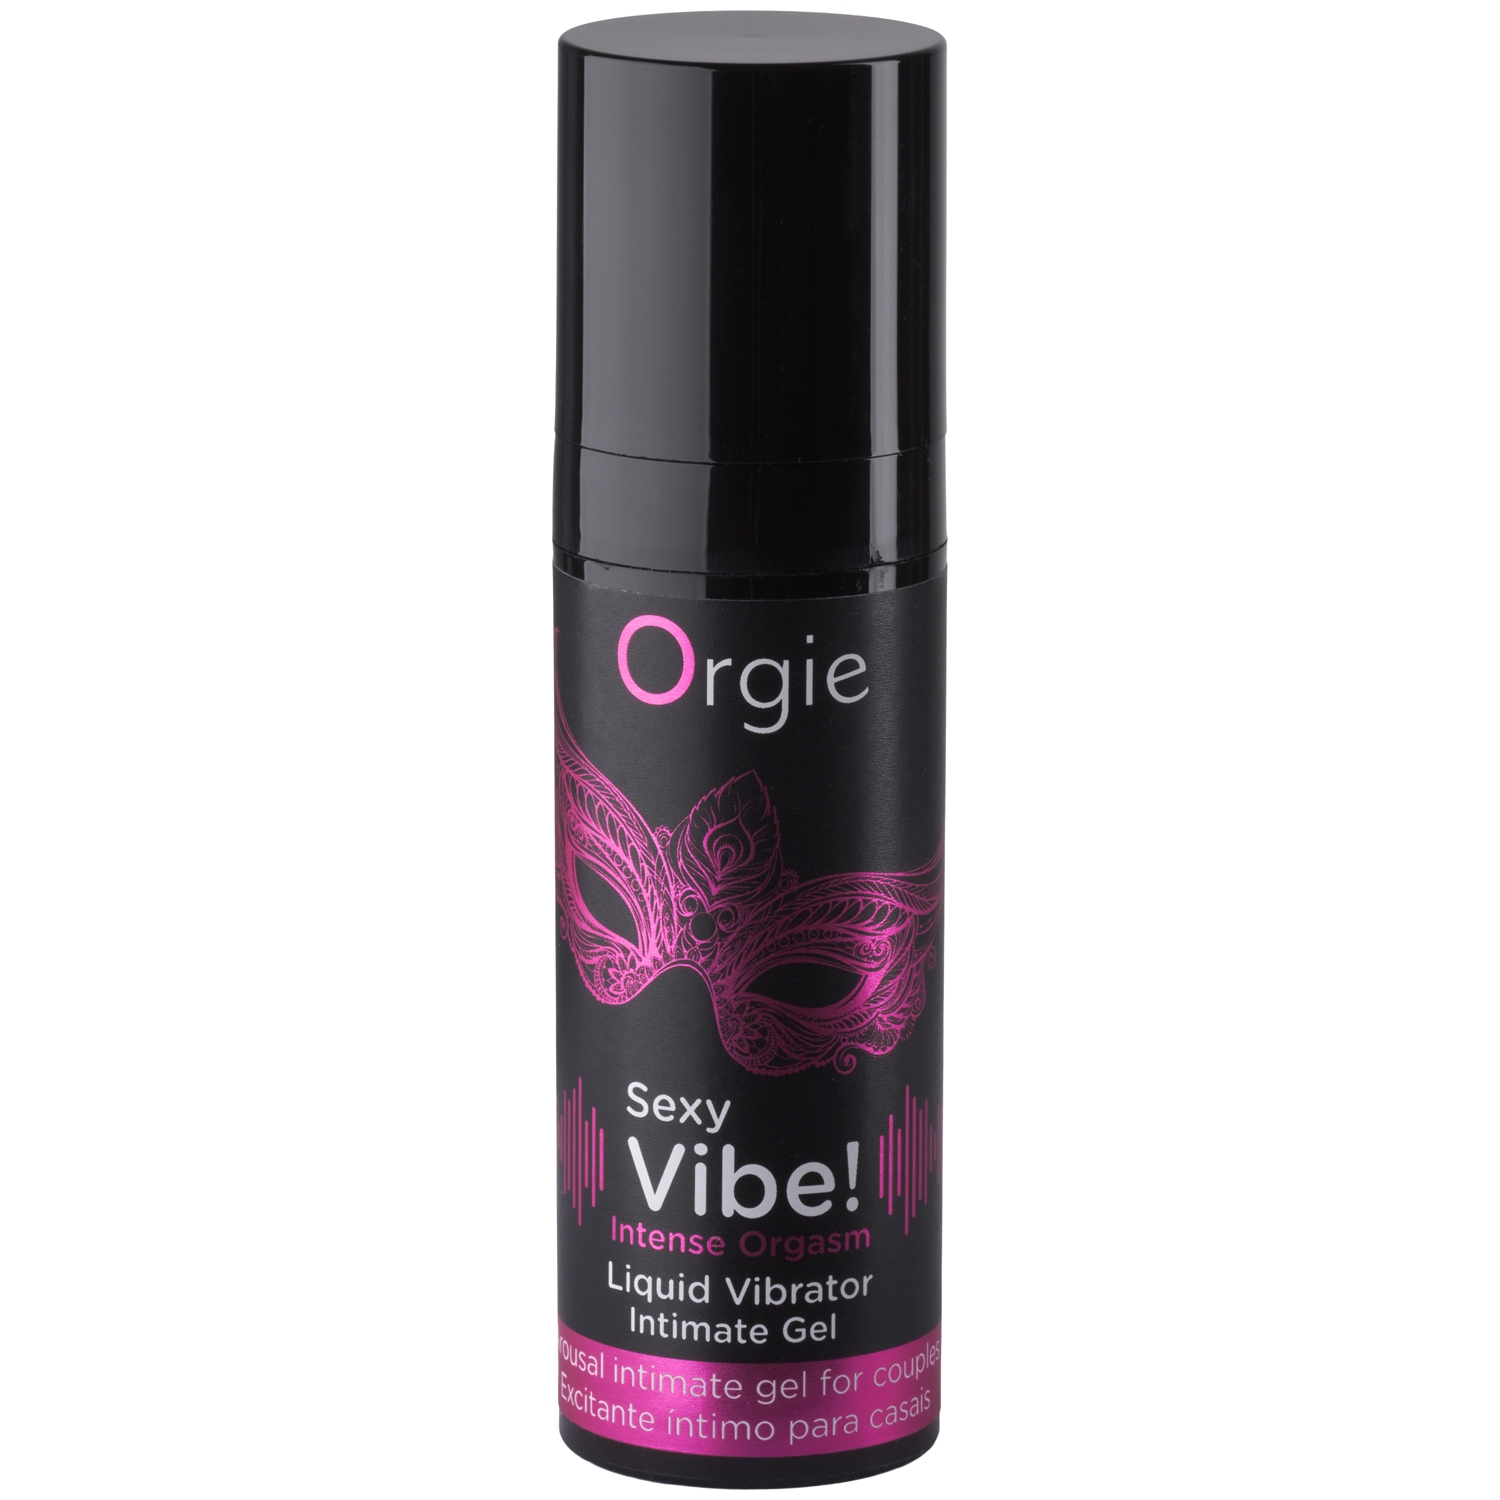 Orgie Sexy Vibe! Intense Orgasm Liquid Vibrator Intimgel 15 ml - Pink